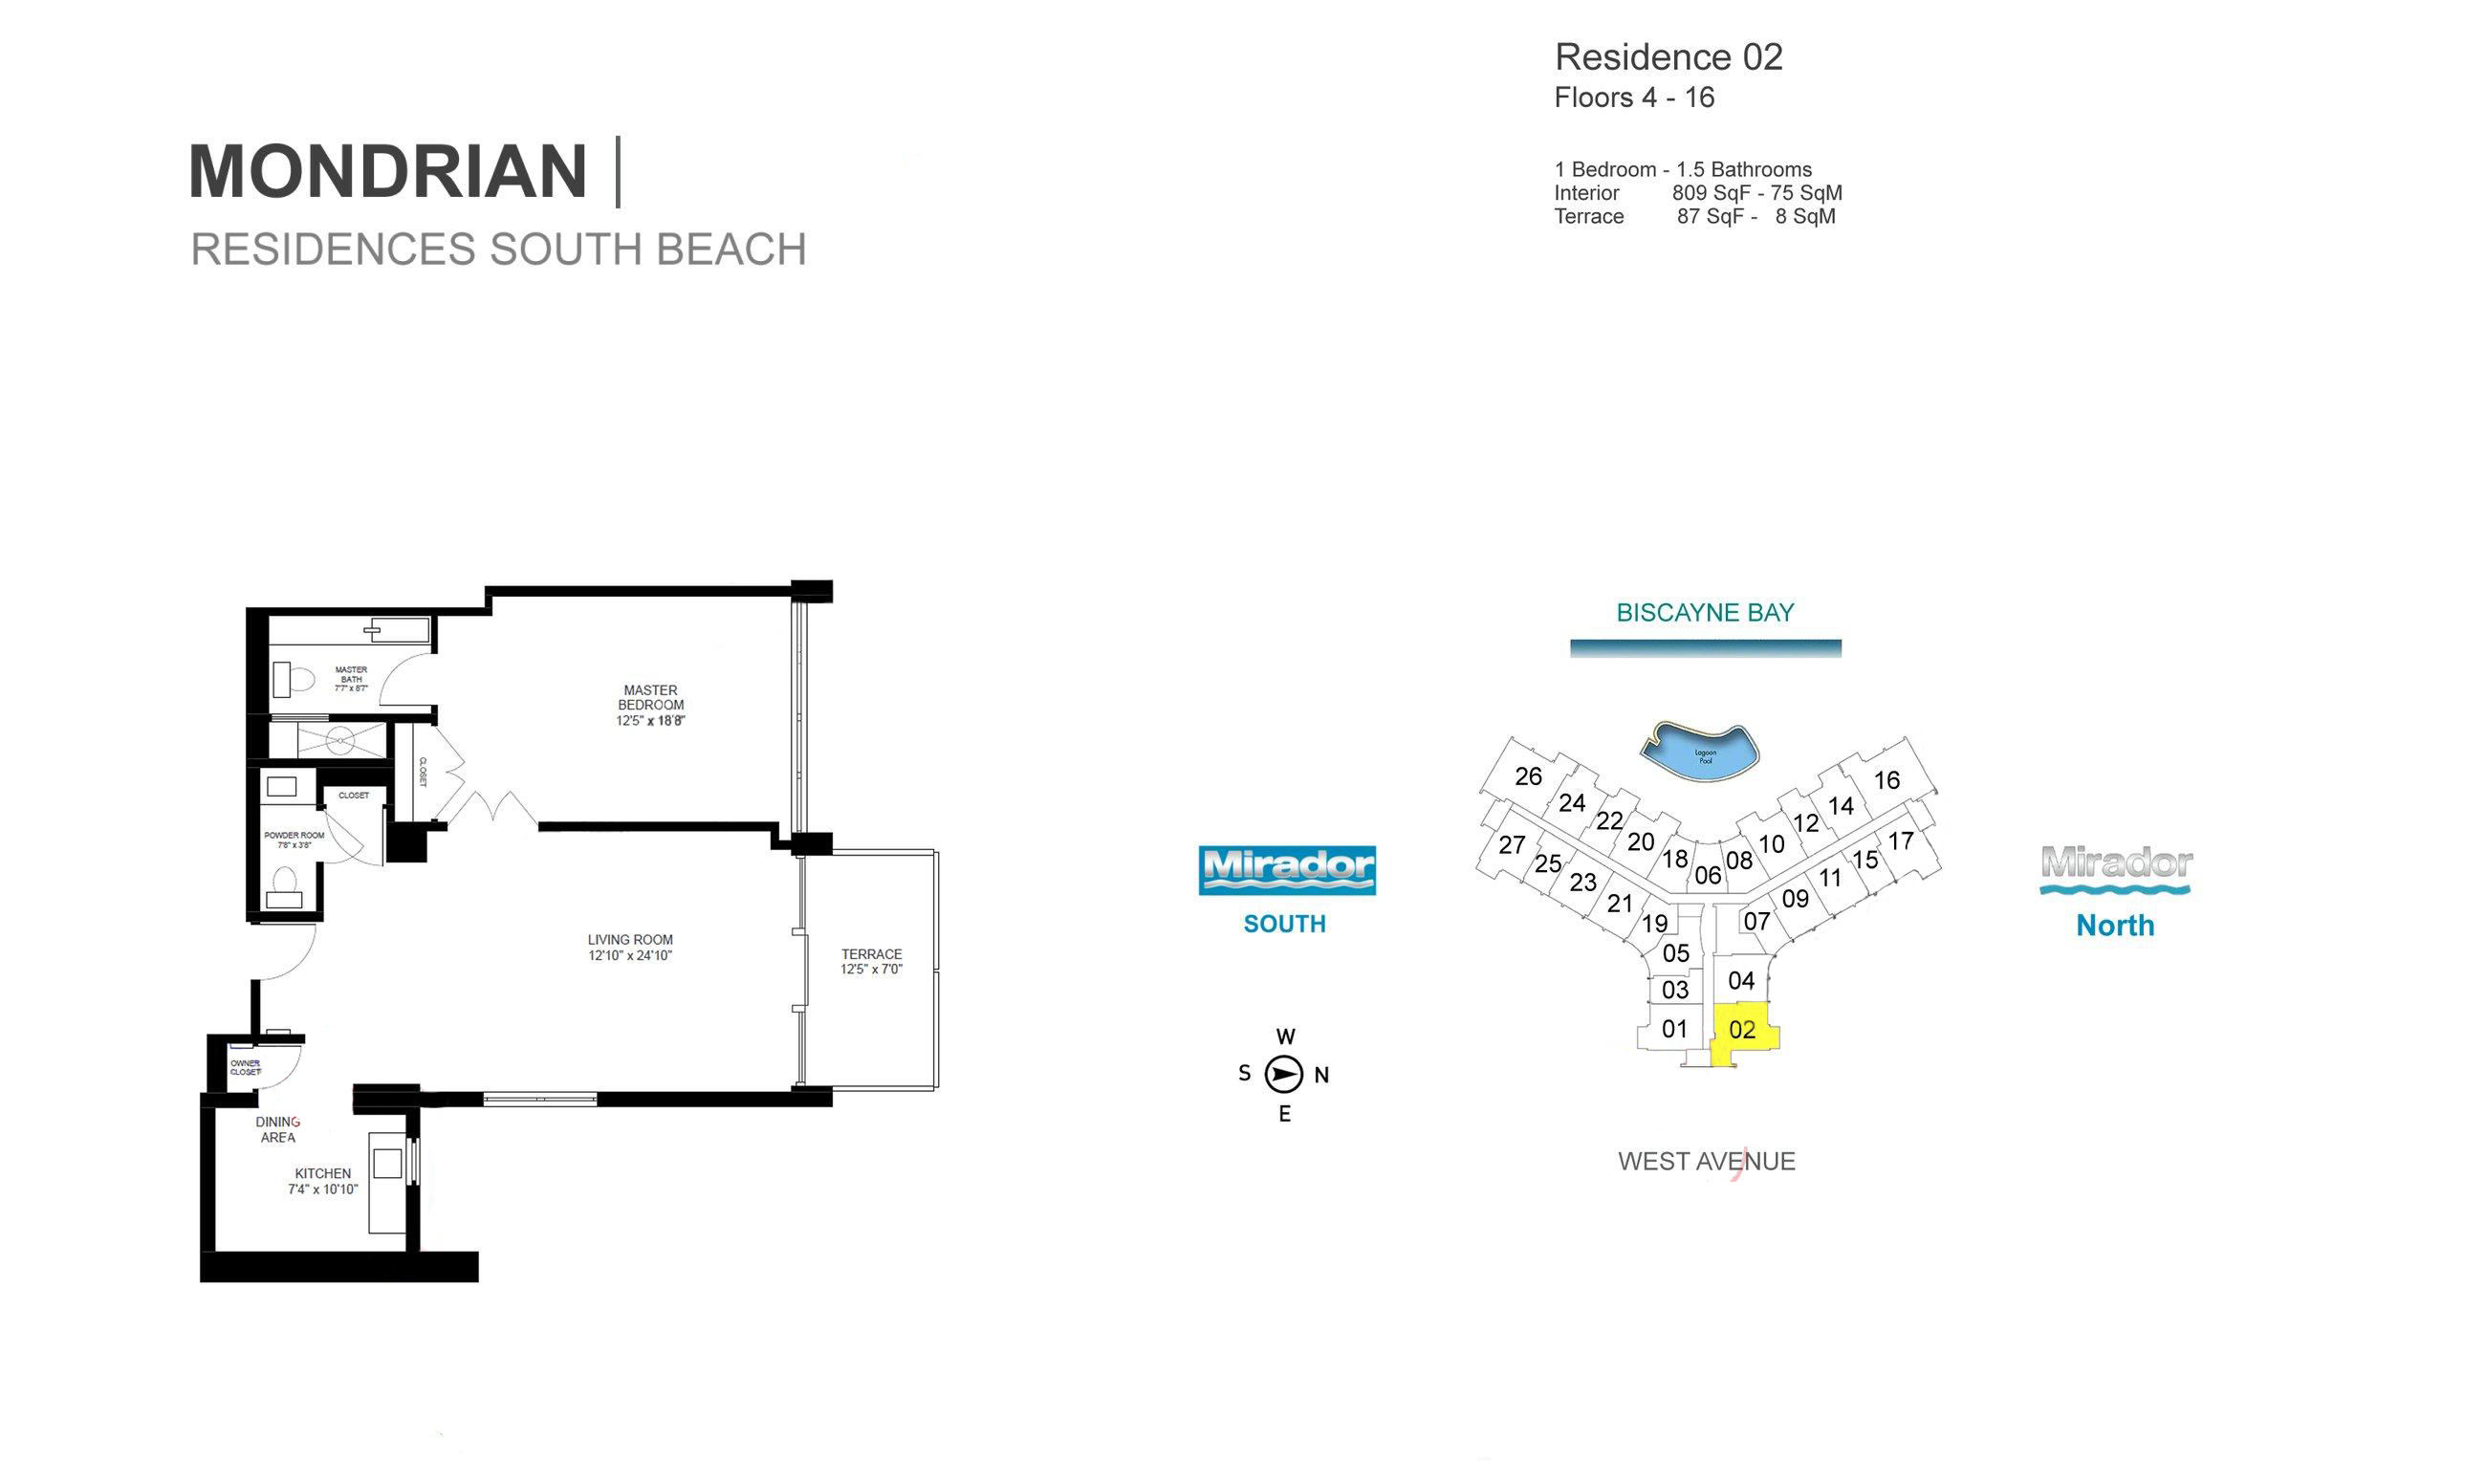 Mondrian South Beach Residence 02